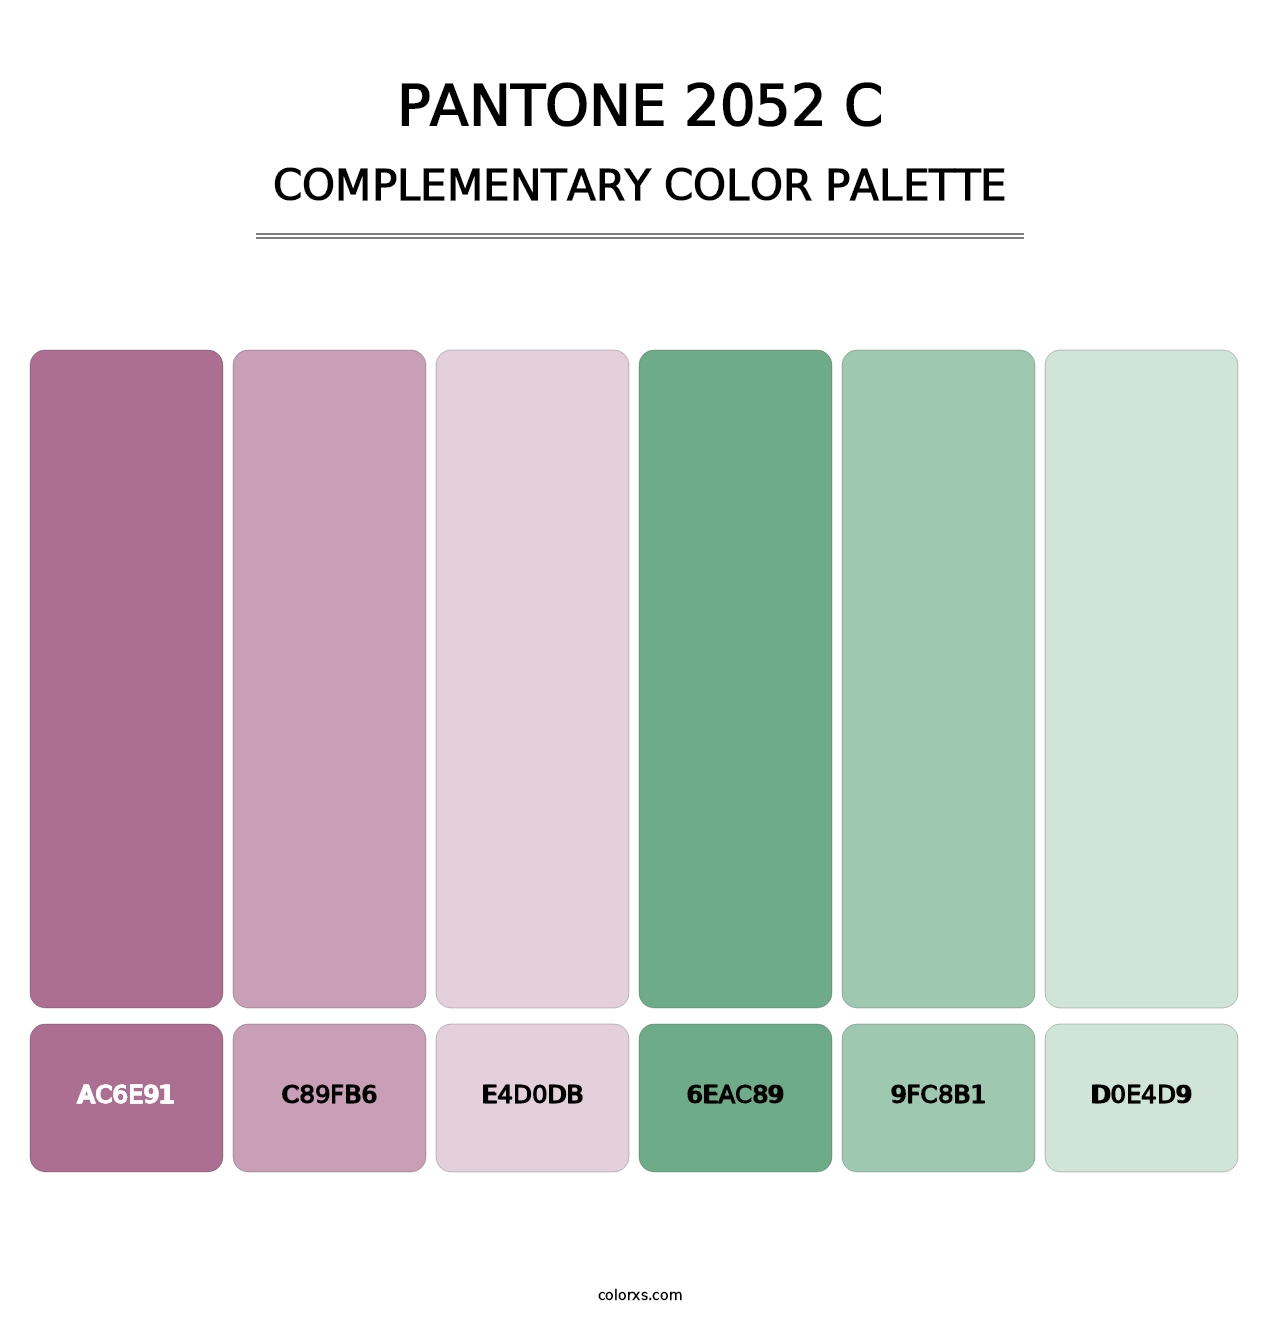 PANTONE 2052 C - Complementary Color Palette